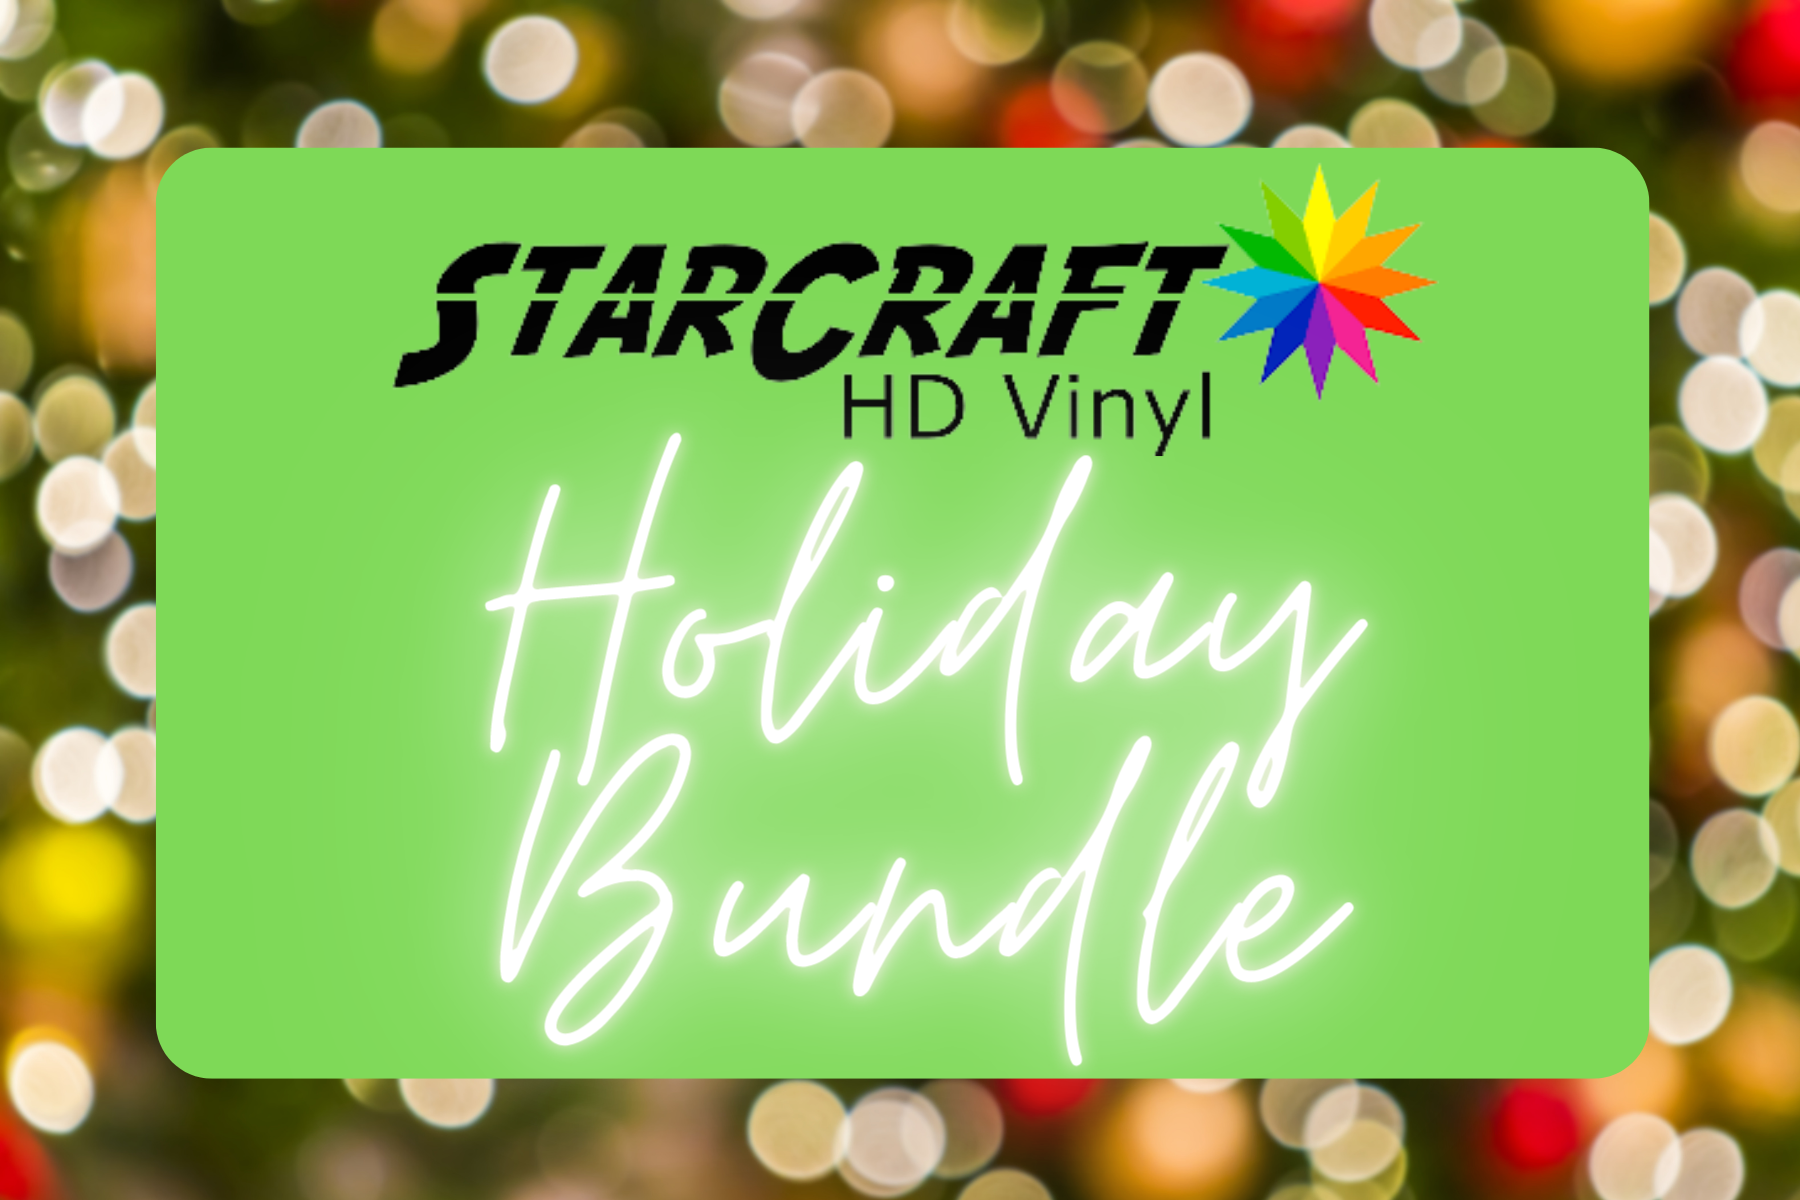 Starcraft 3D Puff HTV - White - 12 x 59 Roll